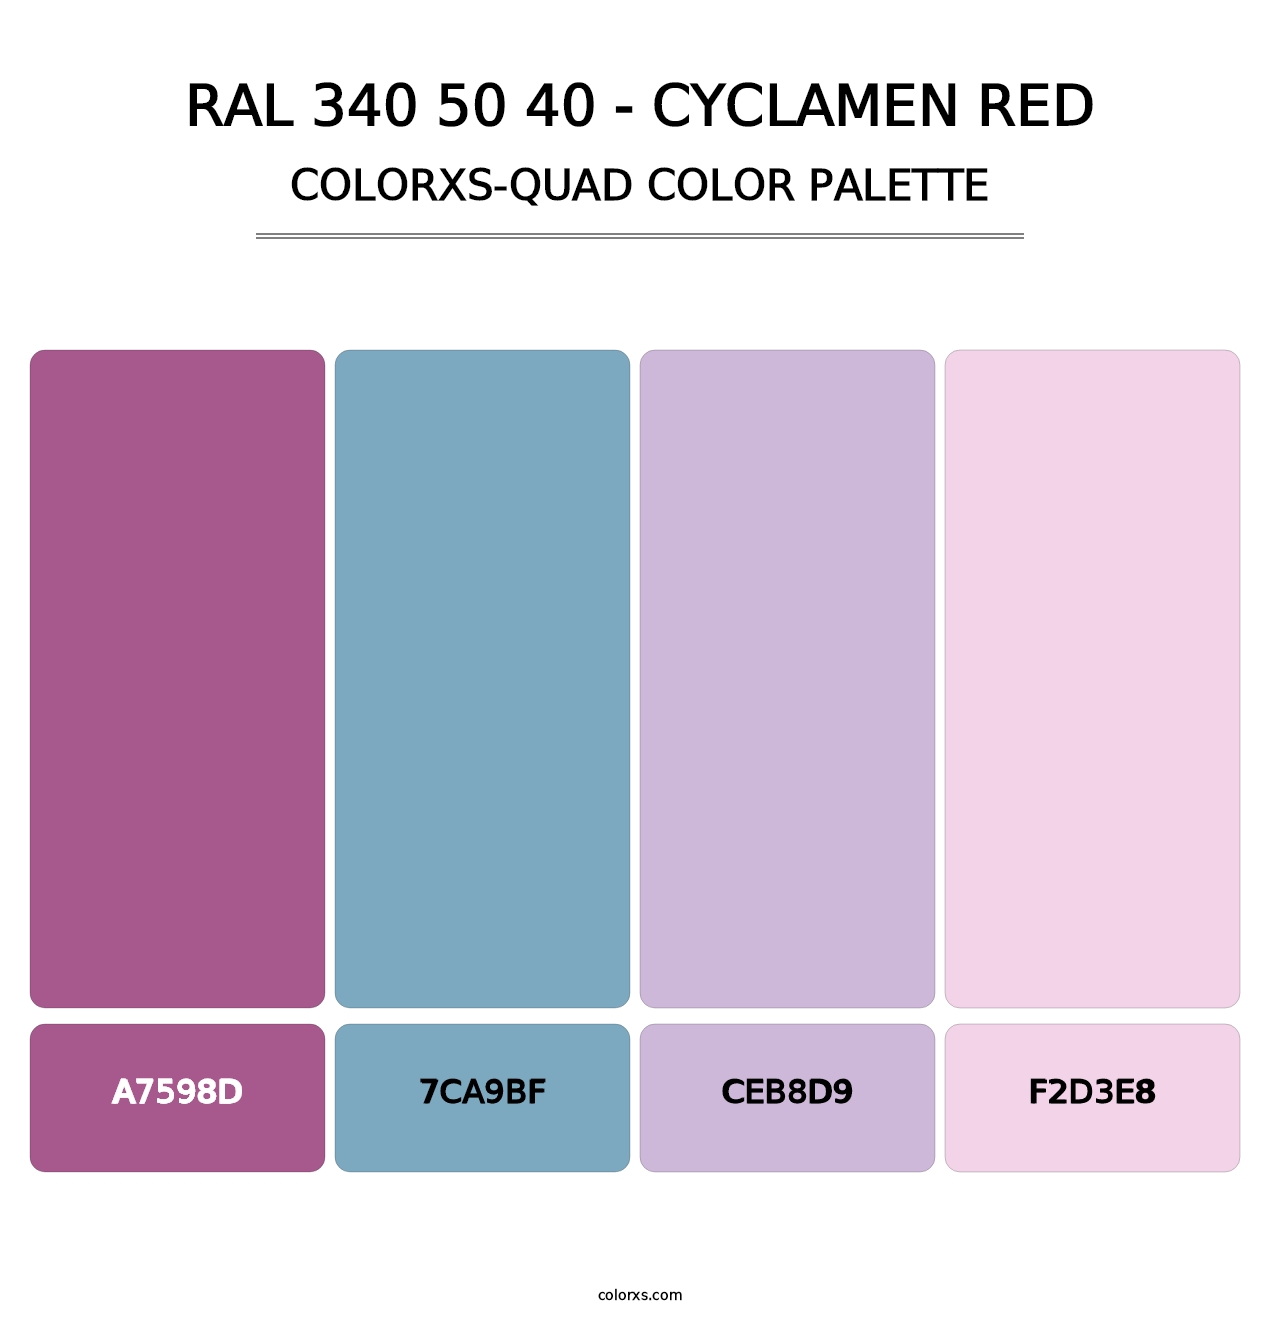 RAL 340 50 40 - Cyclamen Red - Colorxs Quad Palette